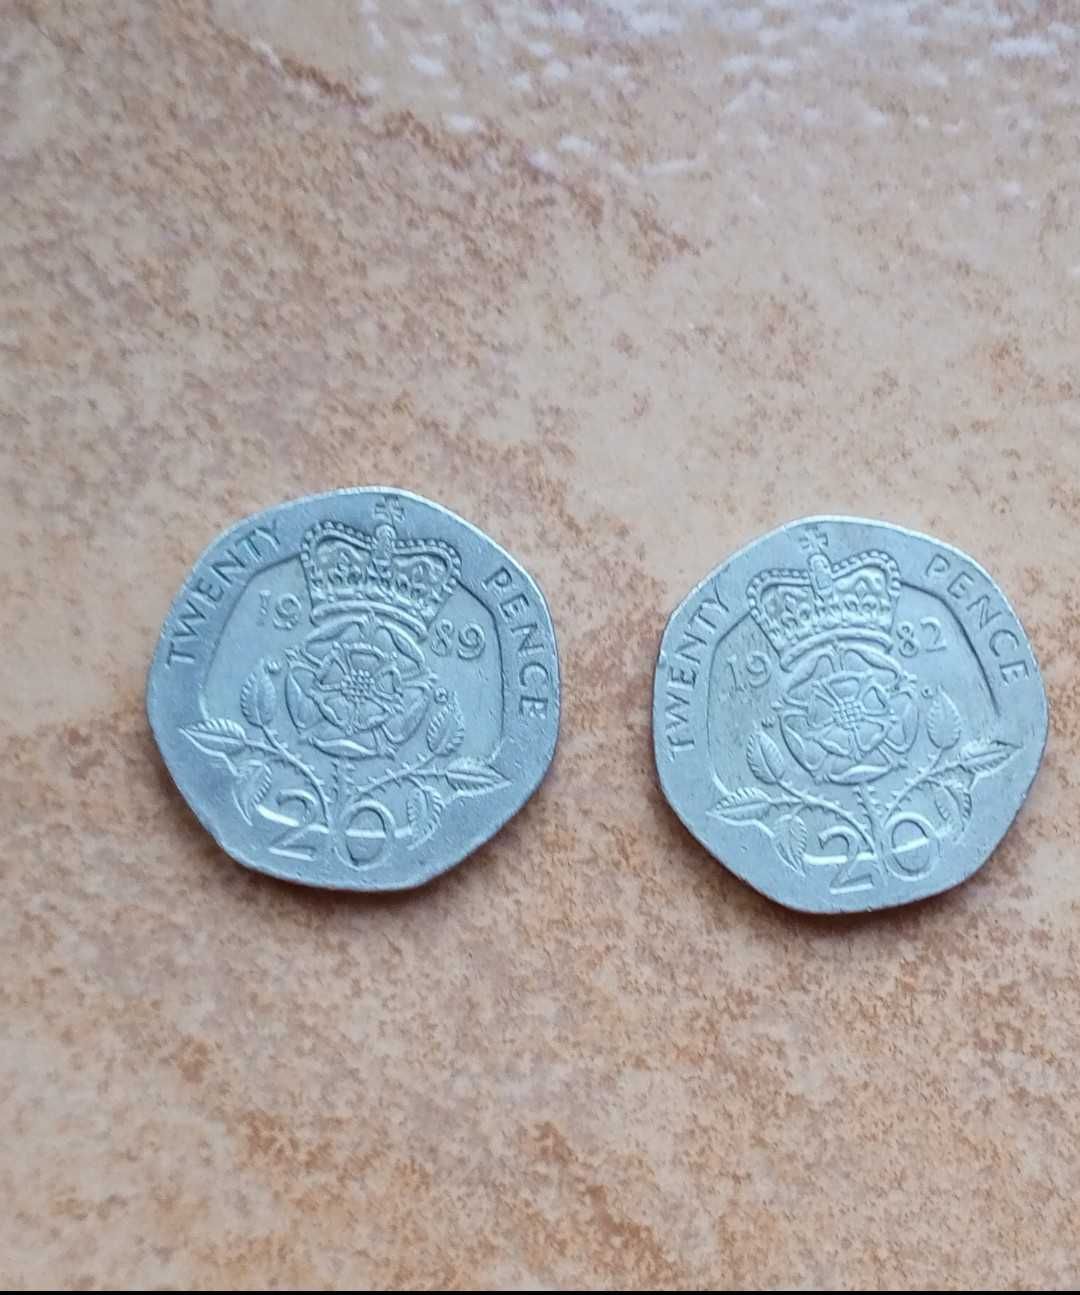 2 monety - Moneta Elizabeth II D. G REG F. D - 20 Pence - 1982 i 1989